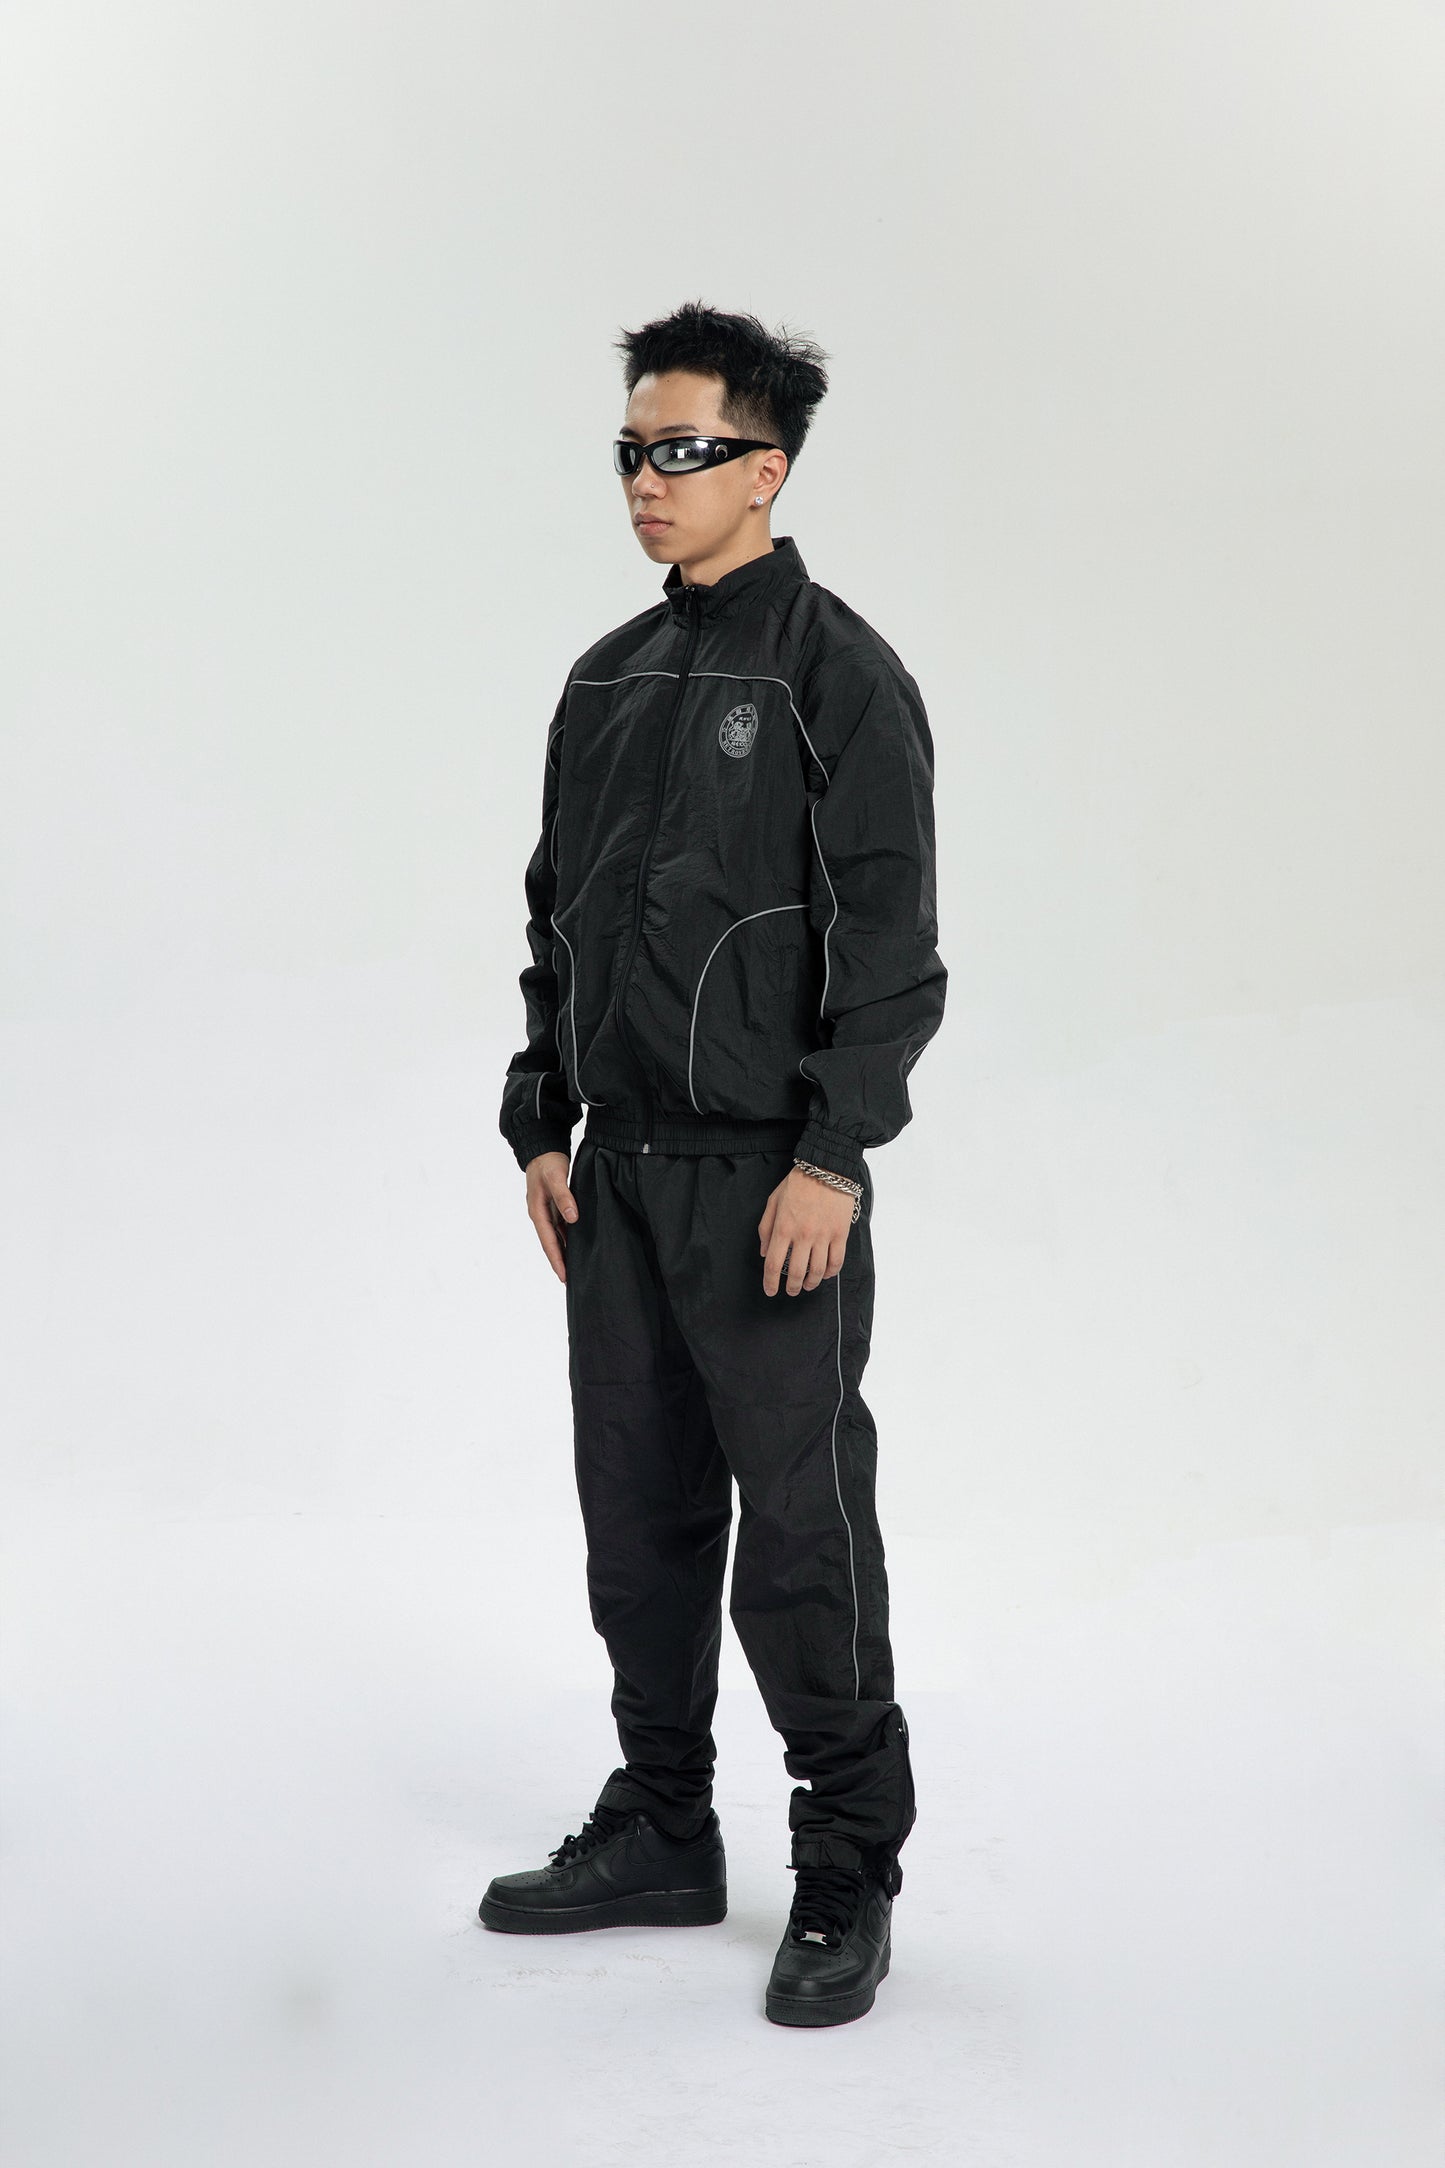 RTVG Double UOGlobe Sport Suit(Jacket+Pants)